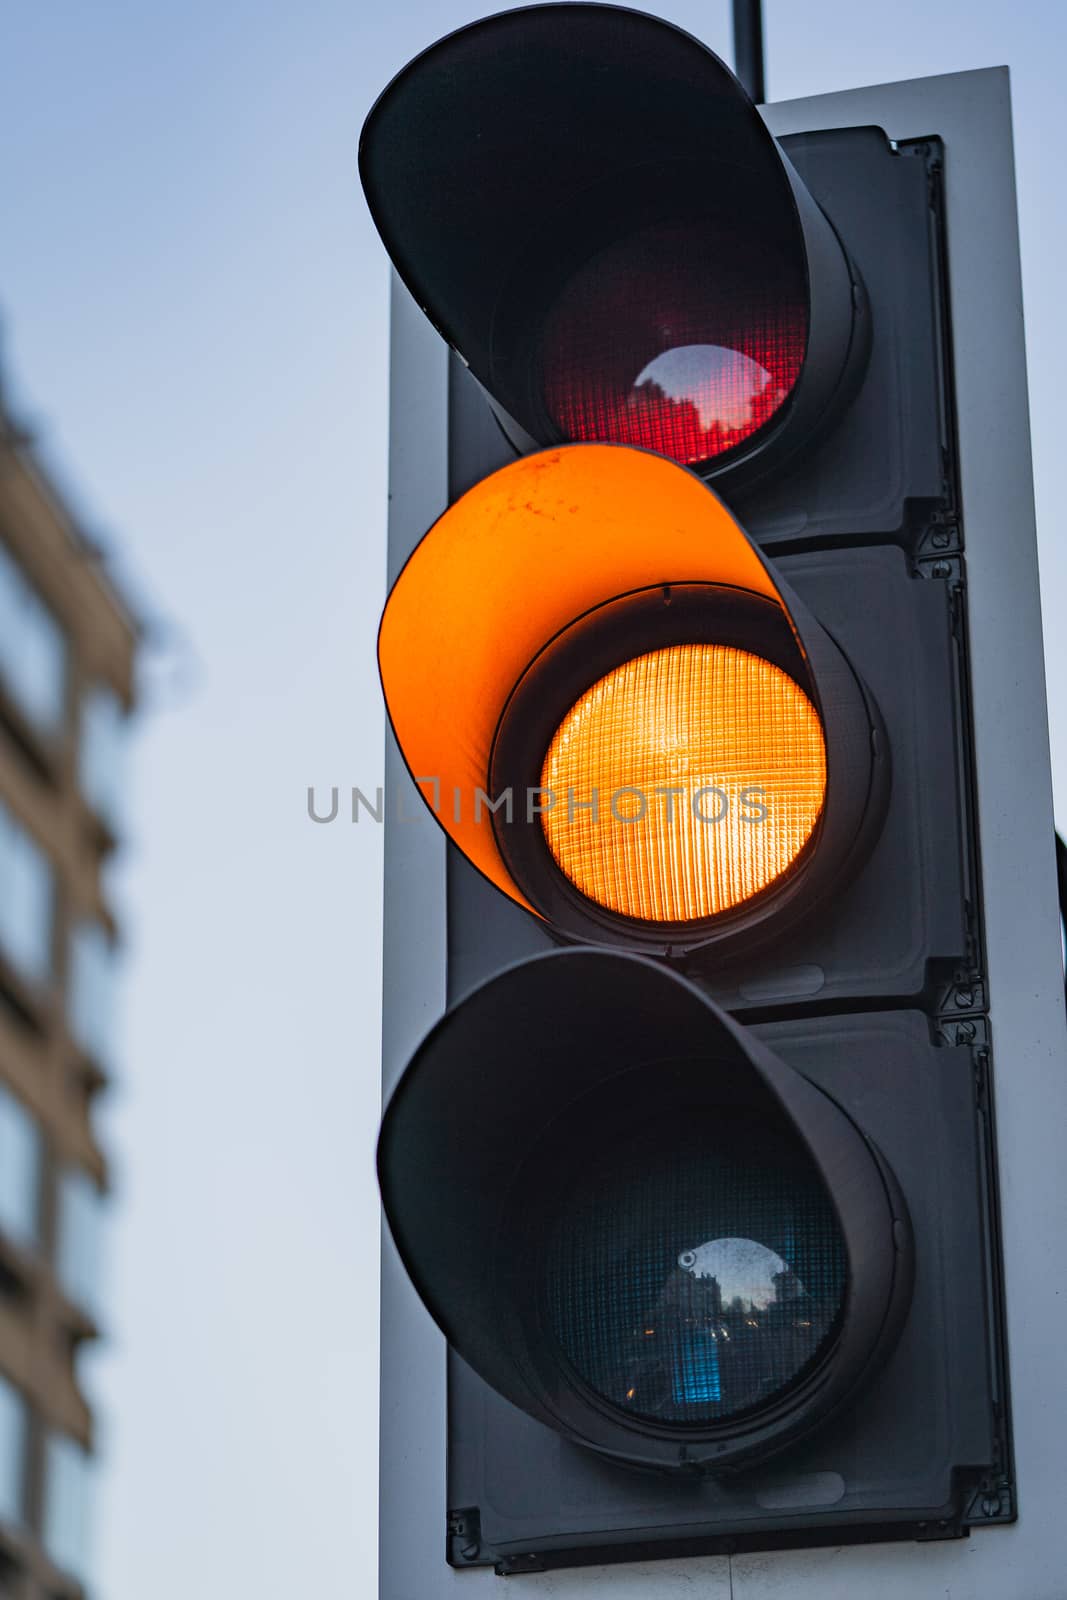 UK Traffic Light by samULvisuals